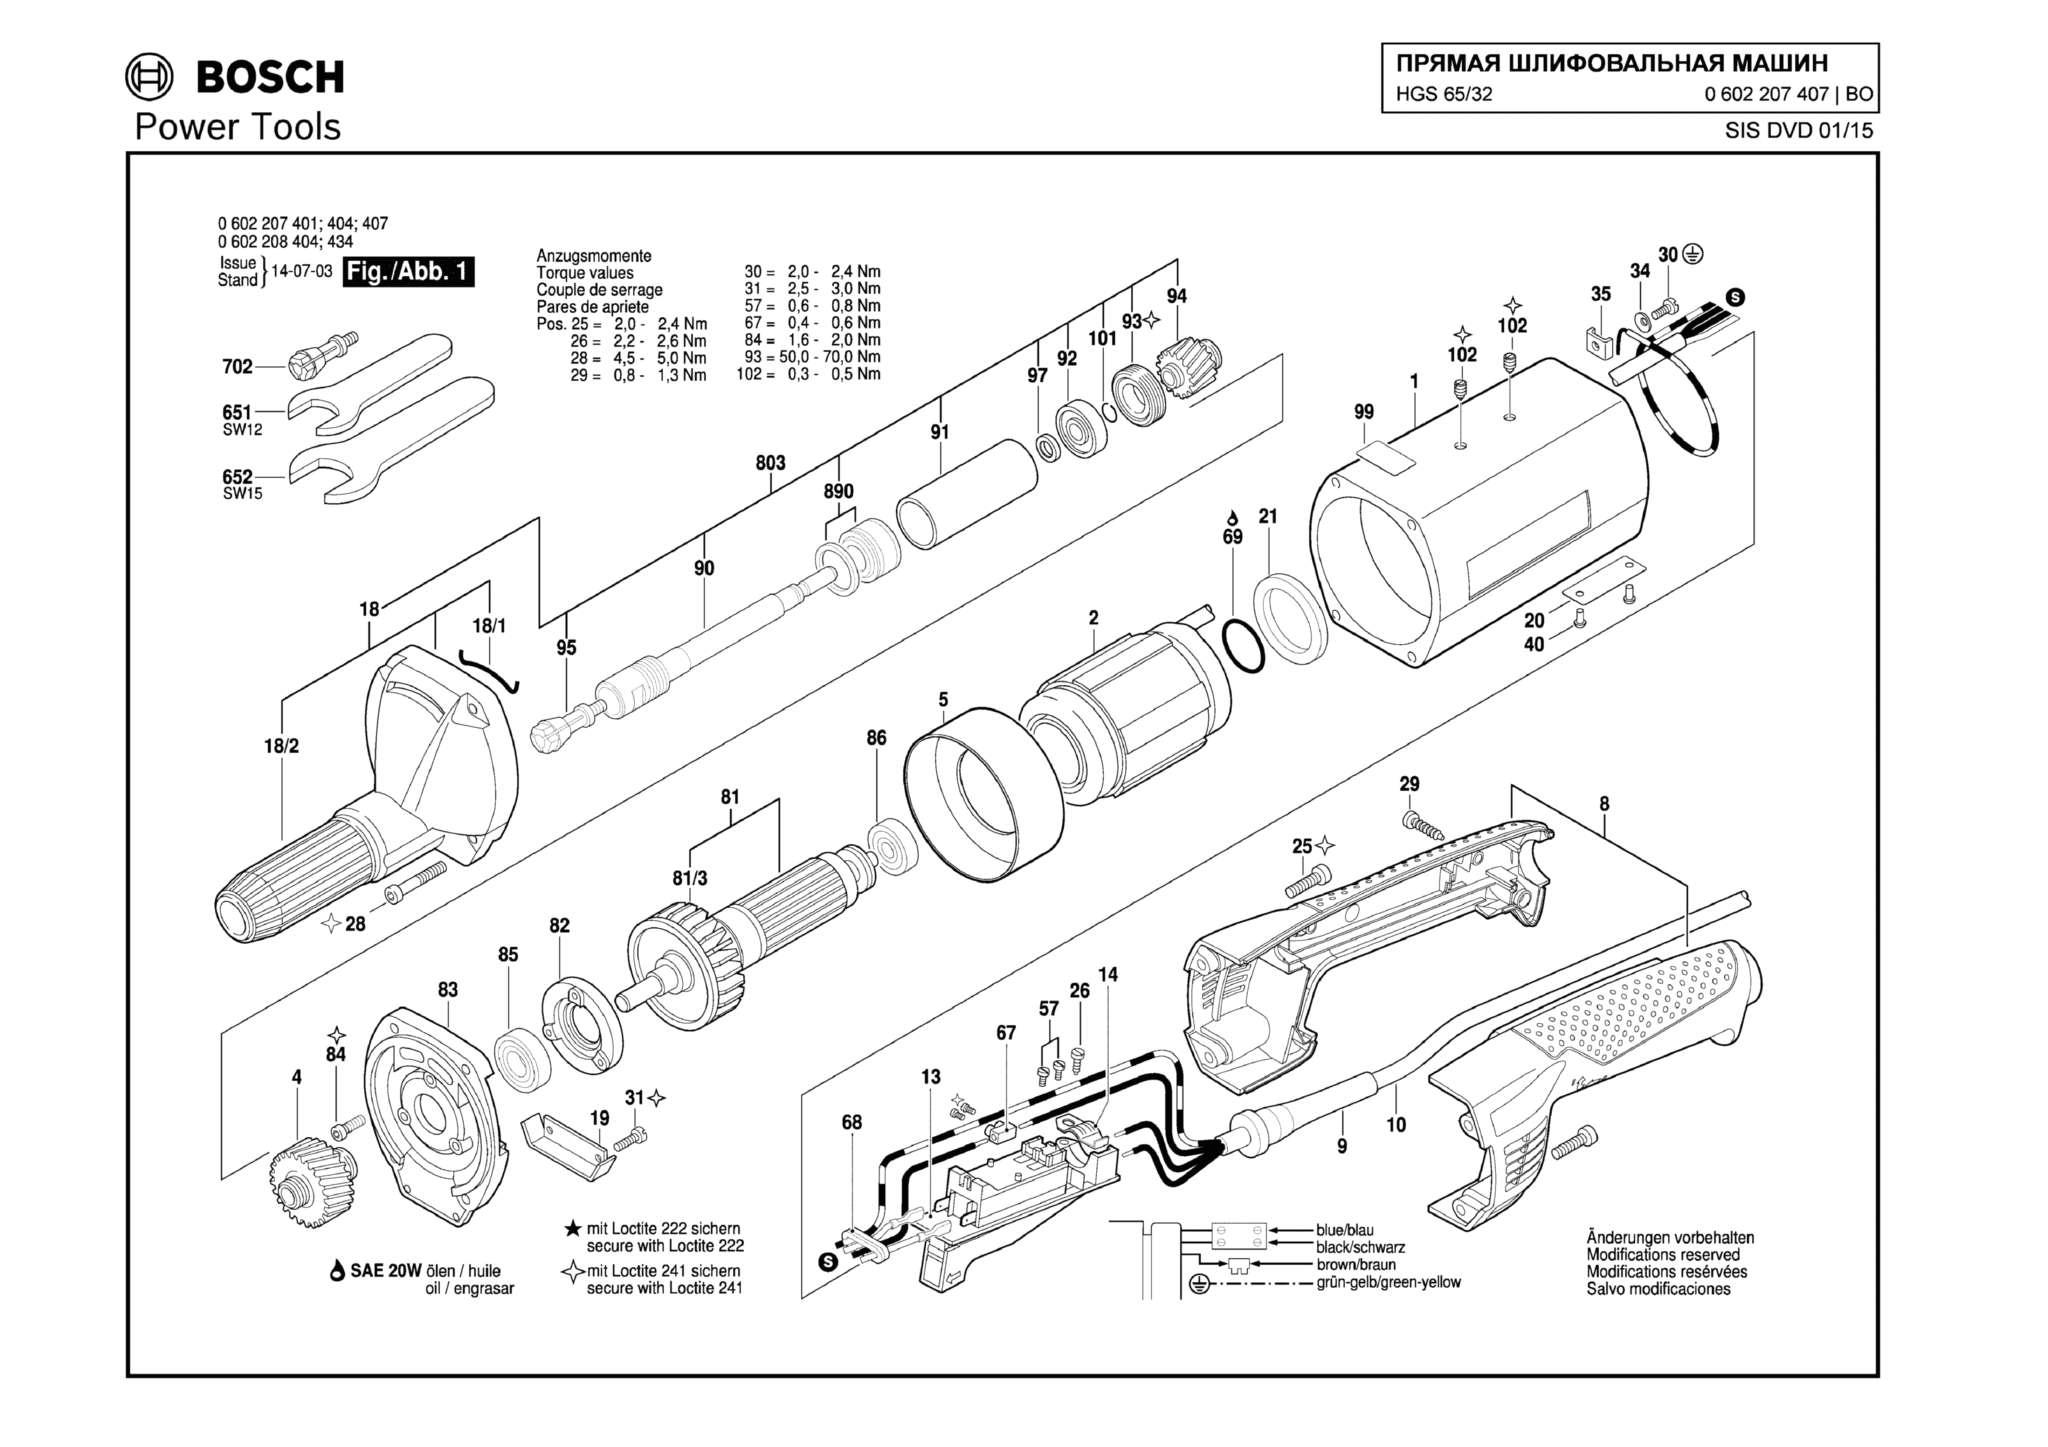 Запчасти, схема и деталировка Bosch HGS 65/32 (ТИП 0602207407)